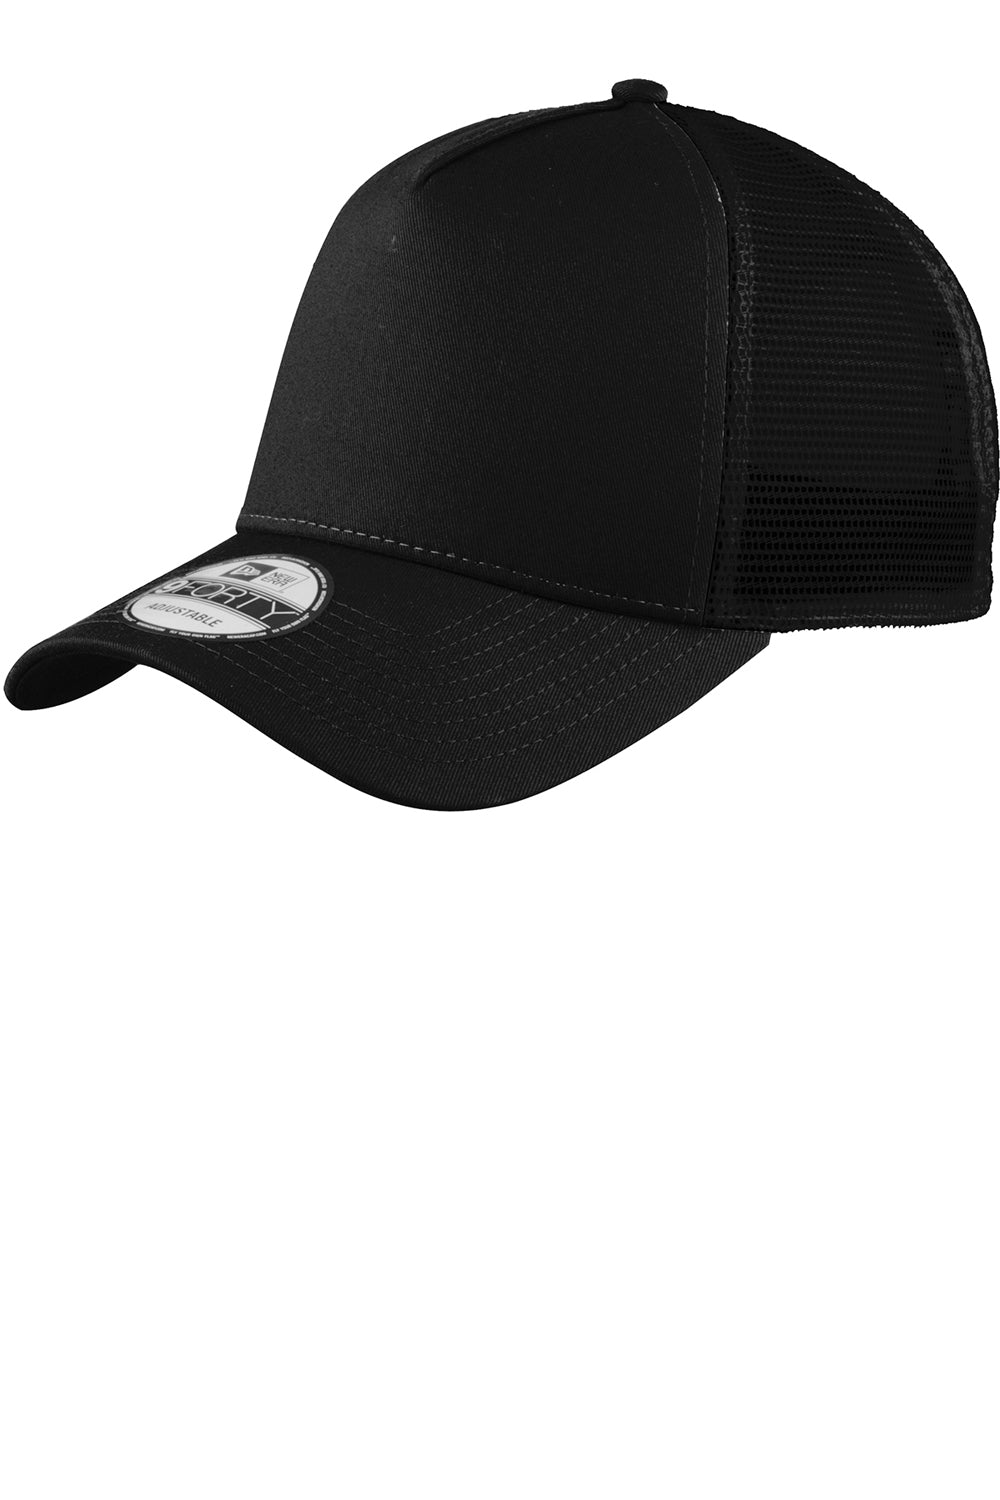 New Era NE205 Mens Adjustable Trucker Hat Black Front